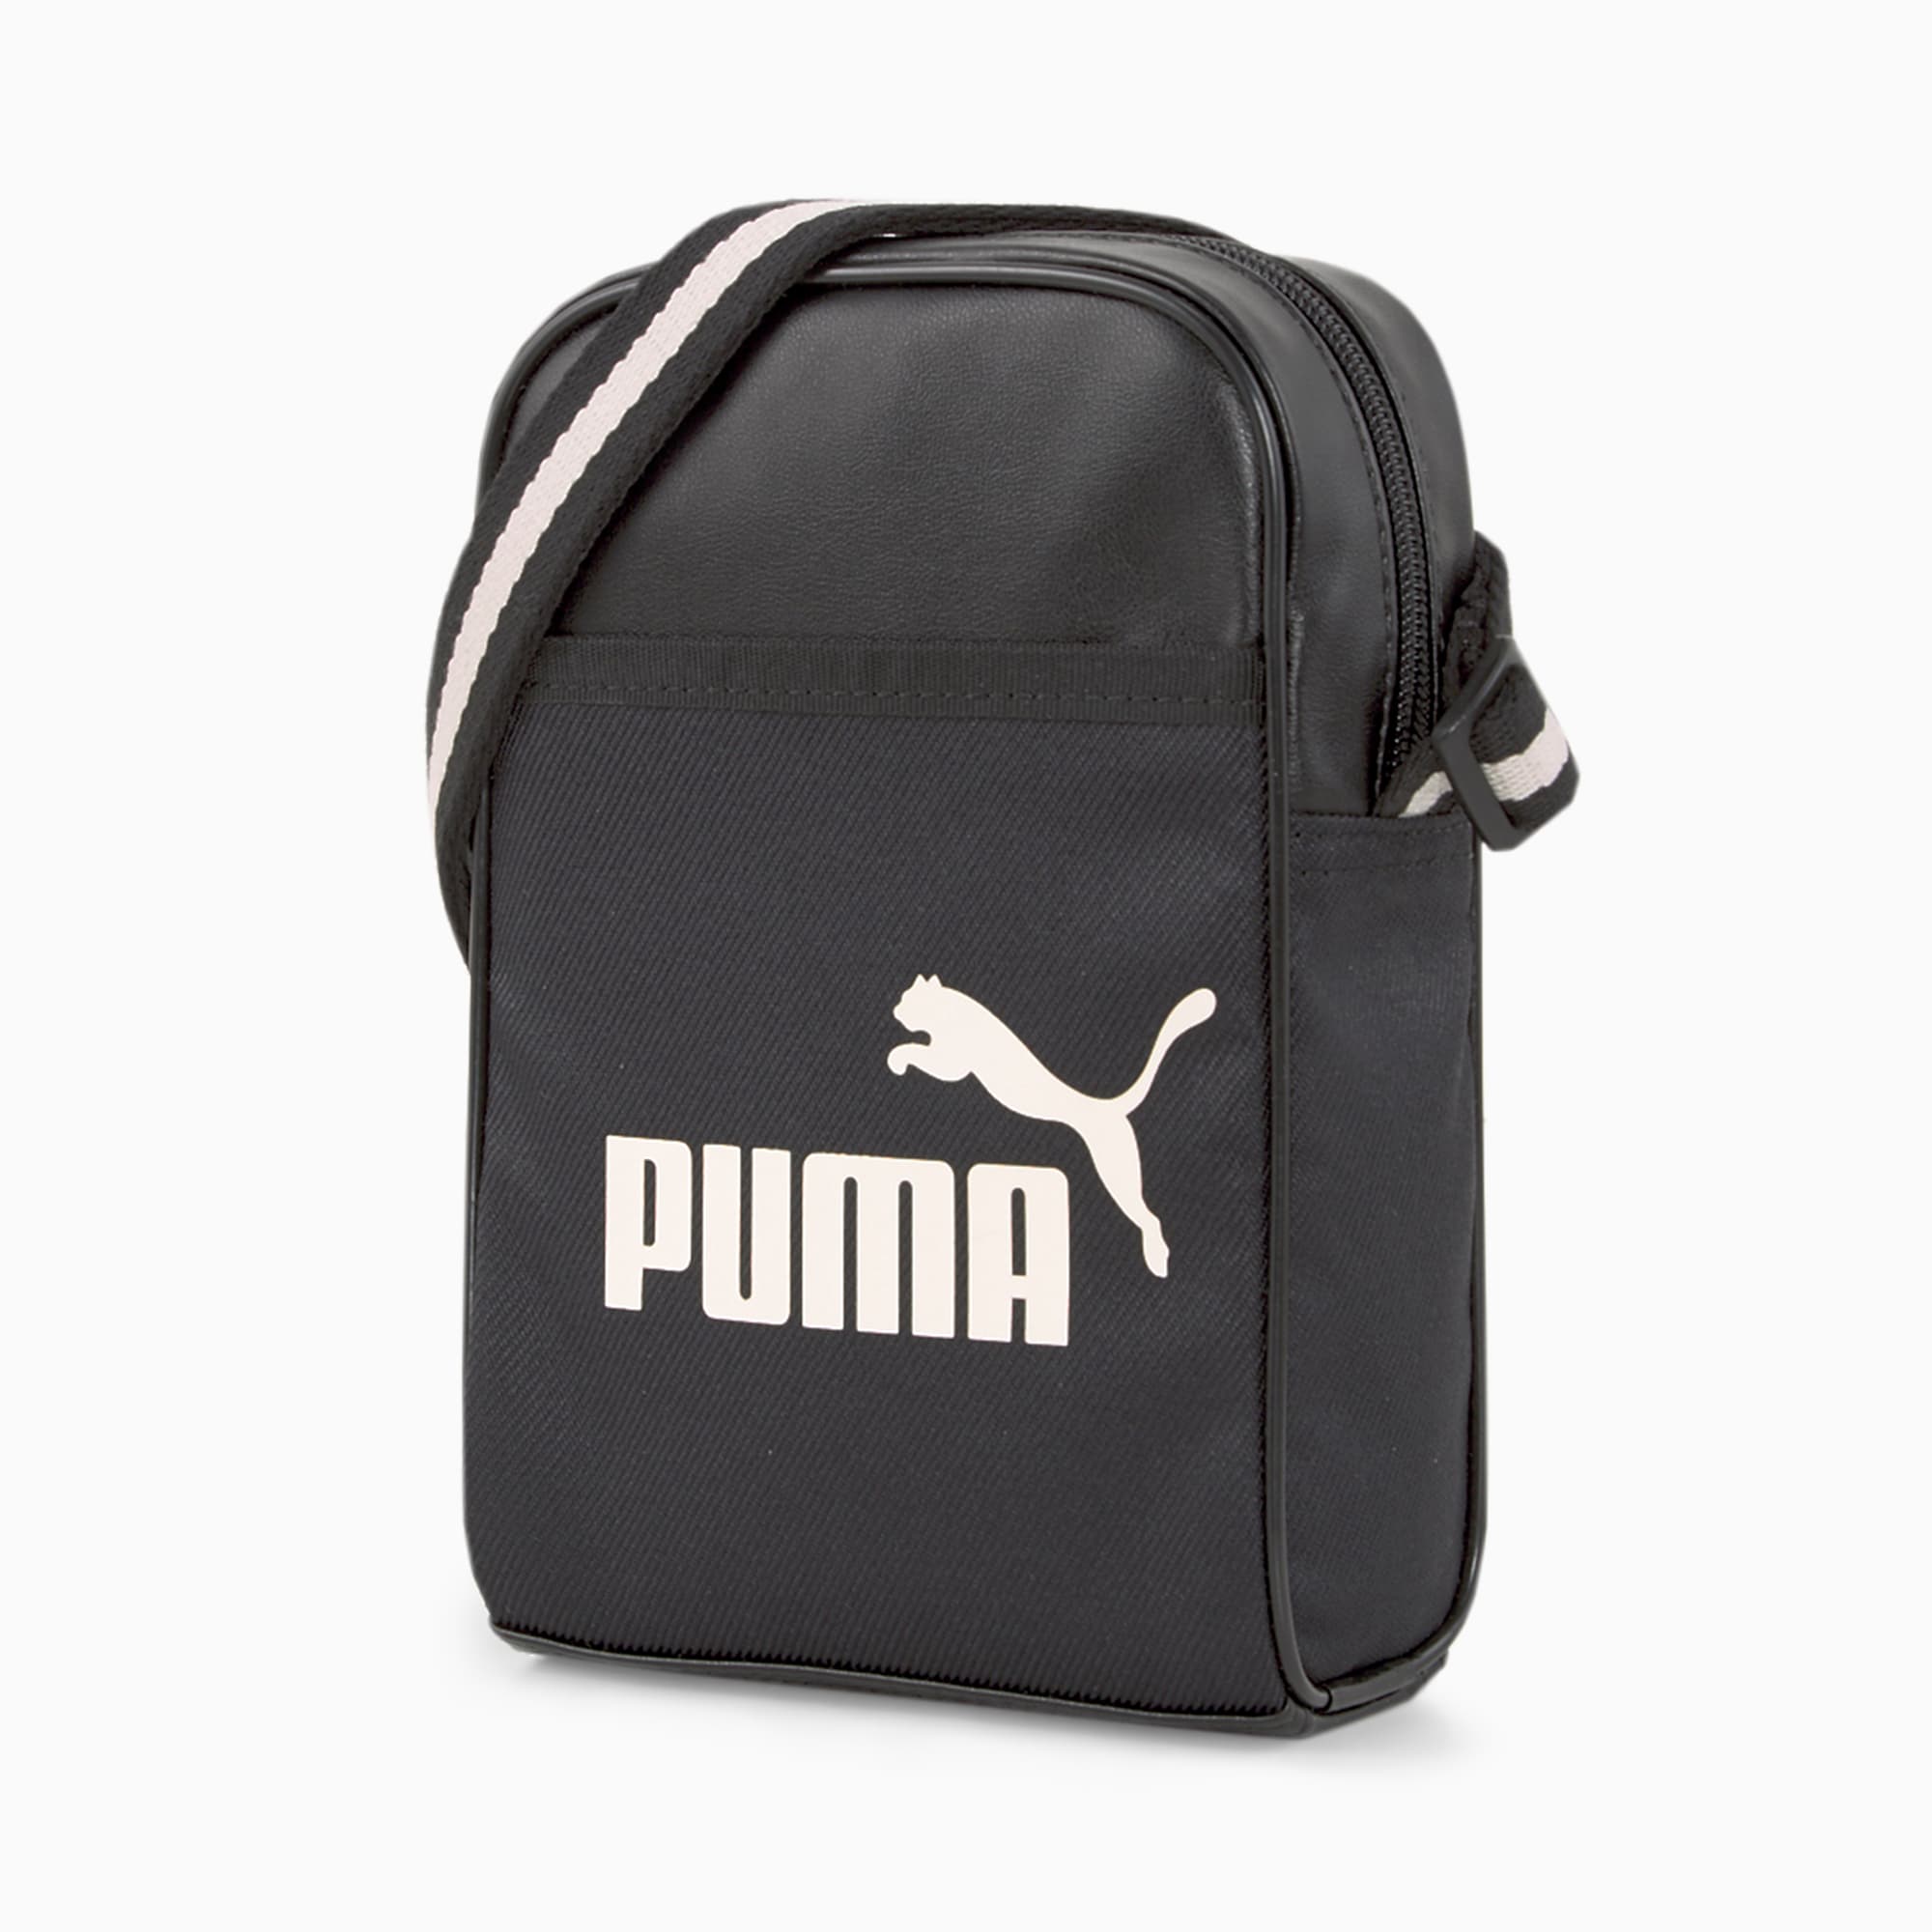 Women's PUMA Campus Compact Portable Shoulder Bag, Black, Accessories